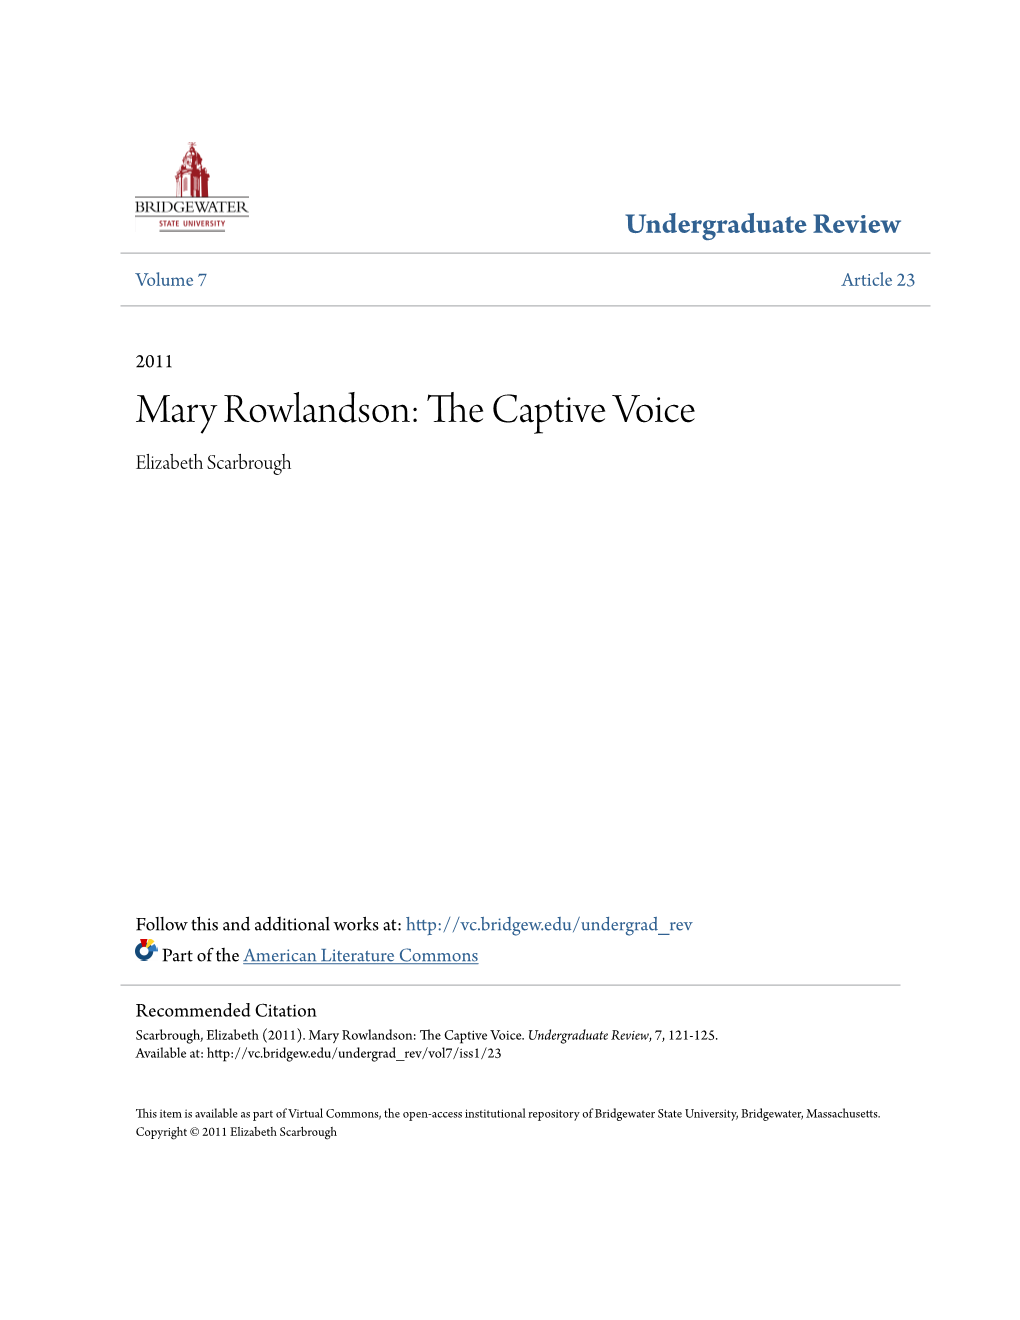 Mary Rowlandson: the Captive Voice